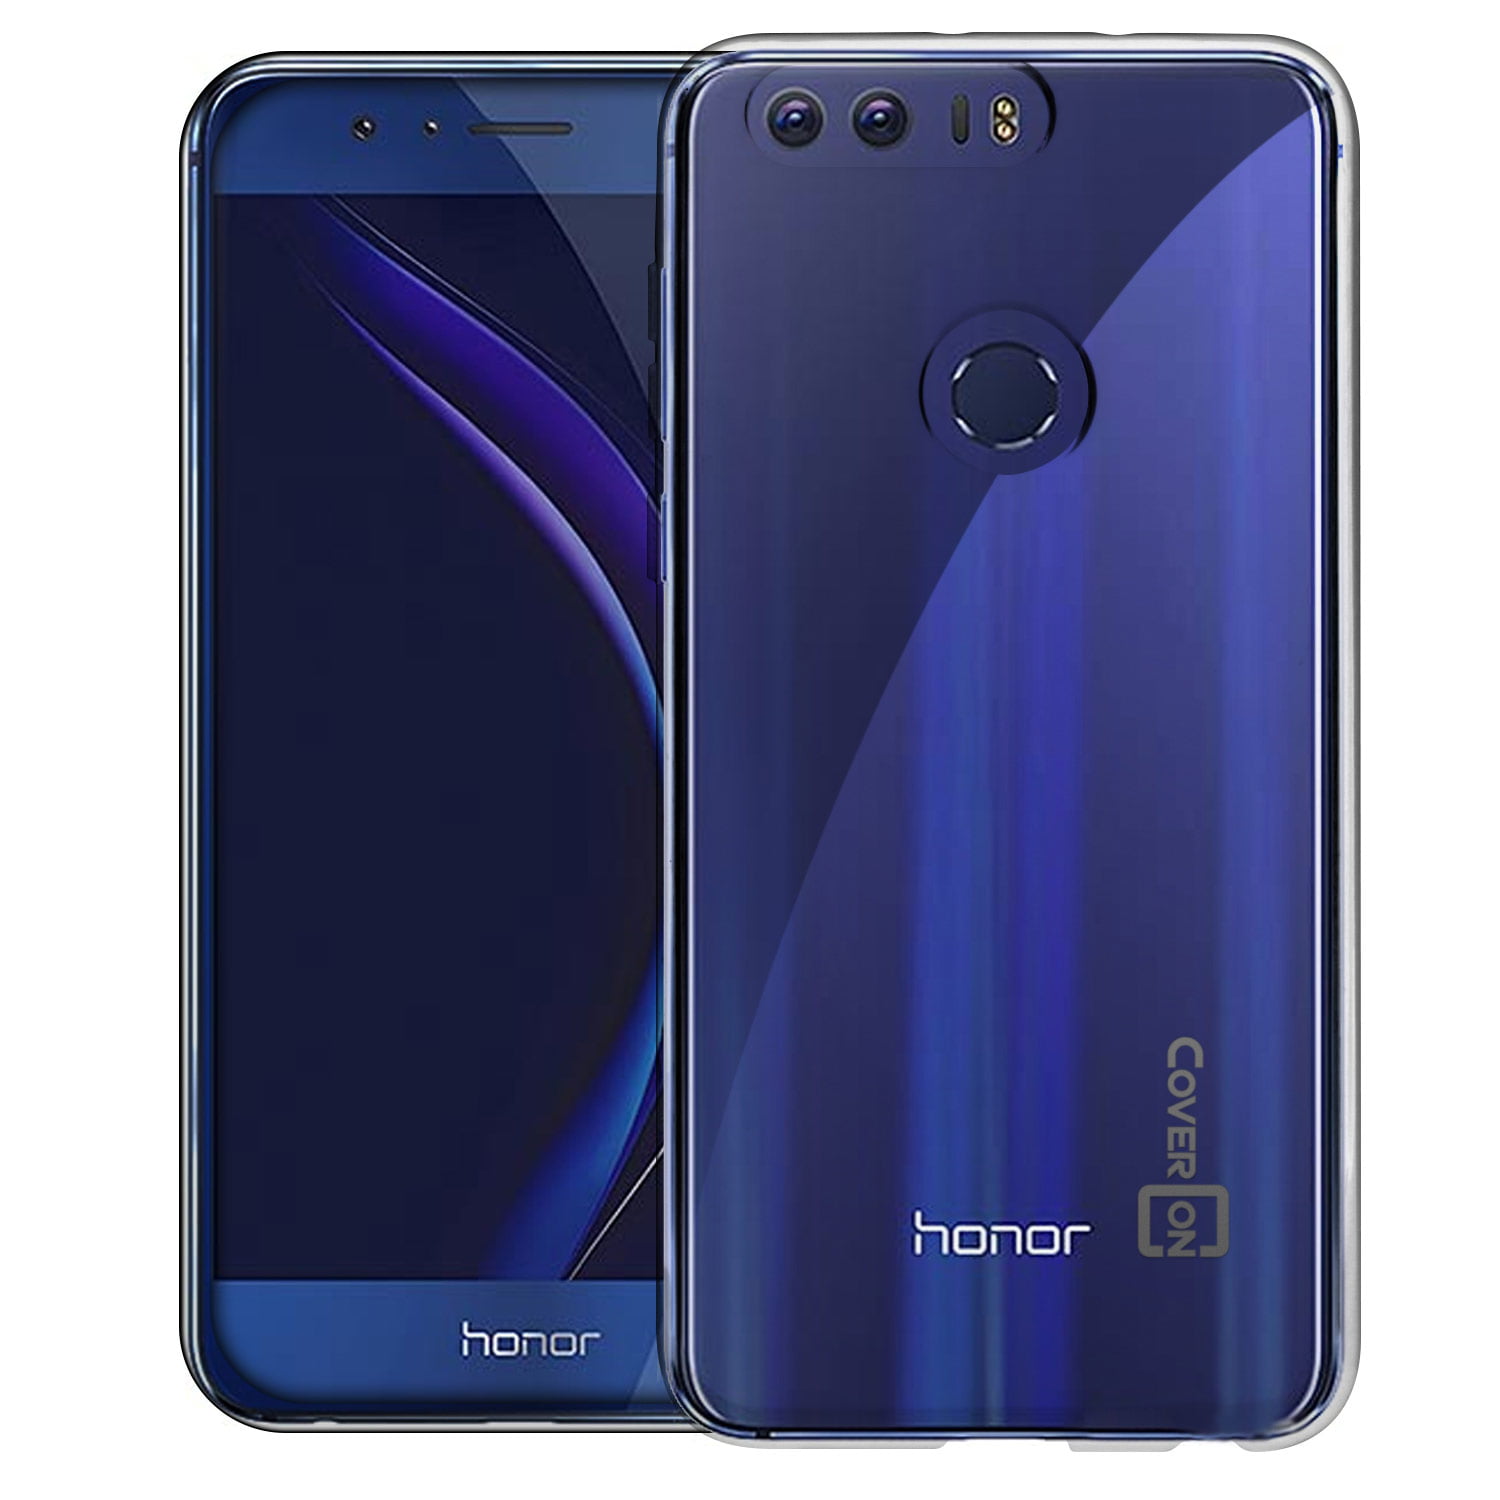 Honor 8 11. Huawei Honor 8. Хуавей хонор 8s. Хонор 80 s. Хонор 8 мини.